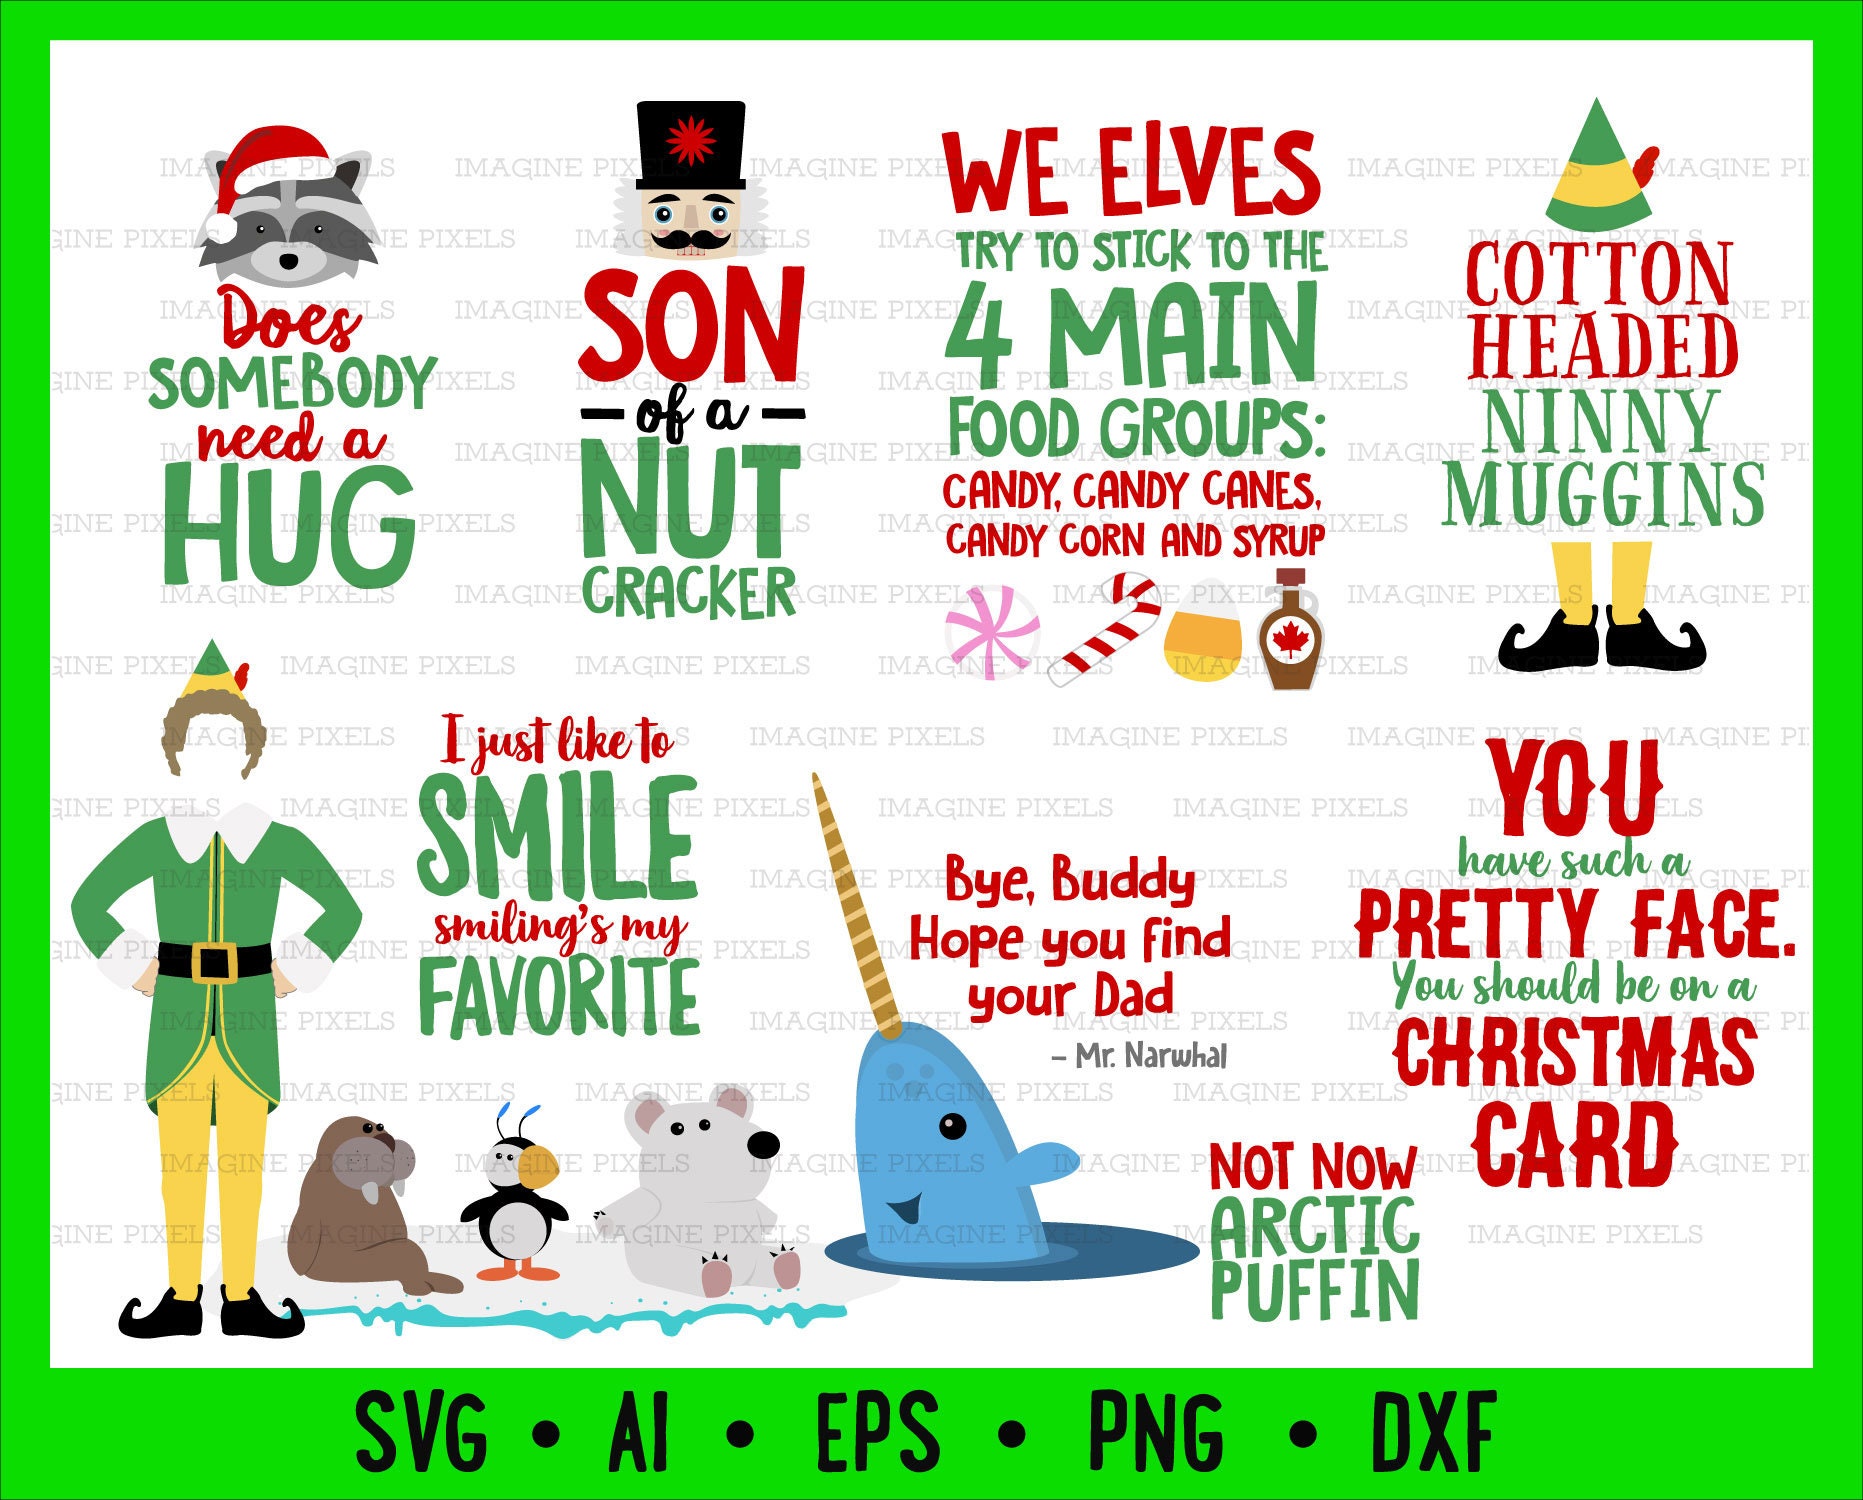  Elf Movie Quotes  Image Bundle DOWNLOAD SVG PNG Dxf Eps 